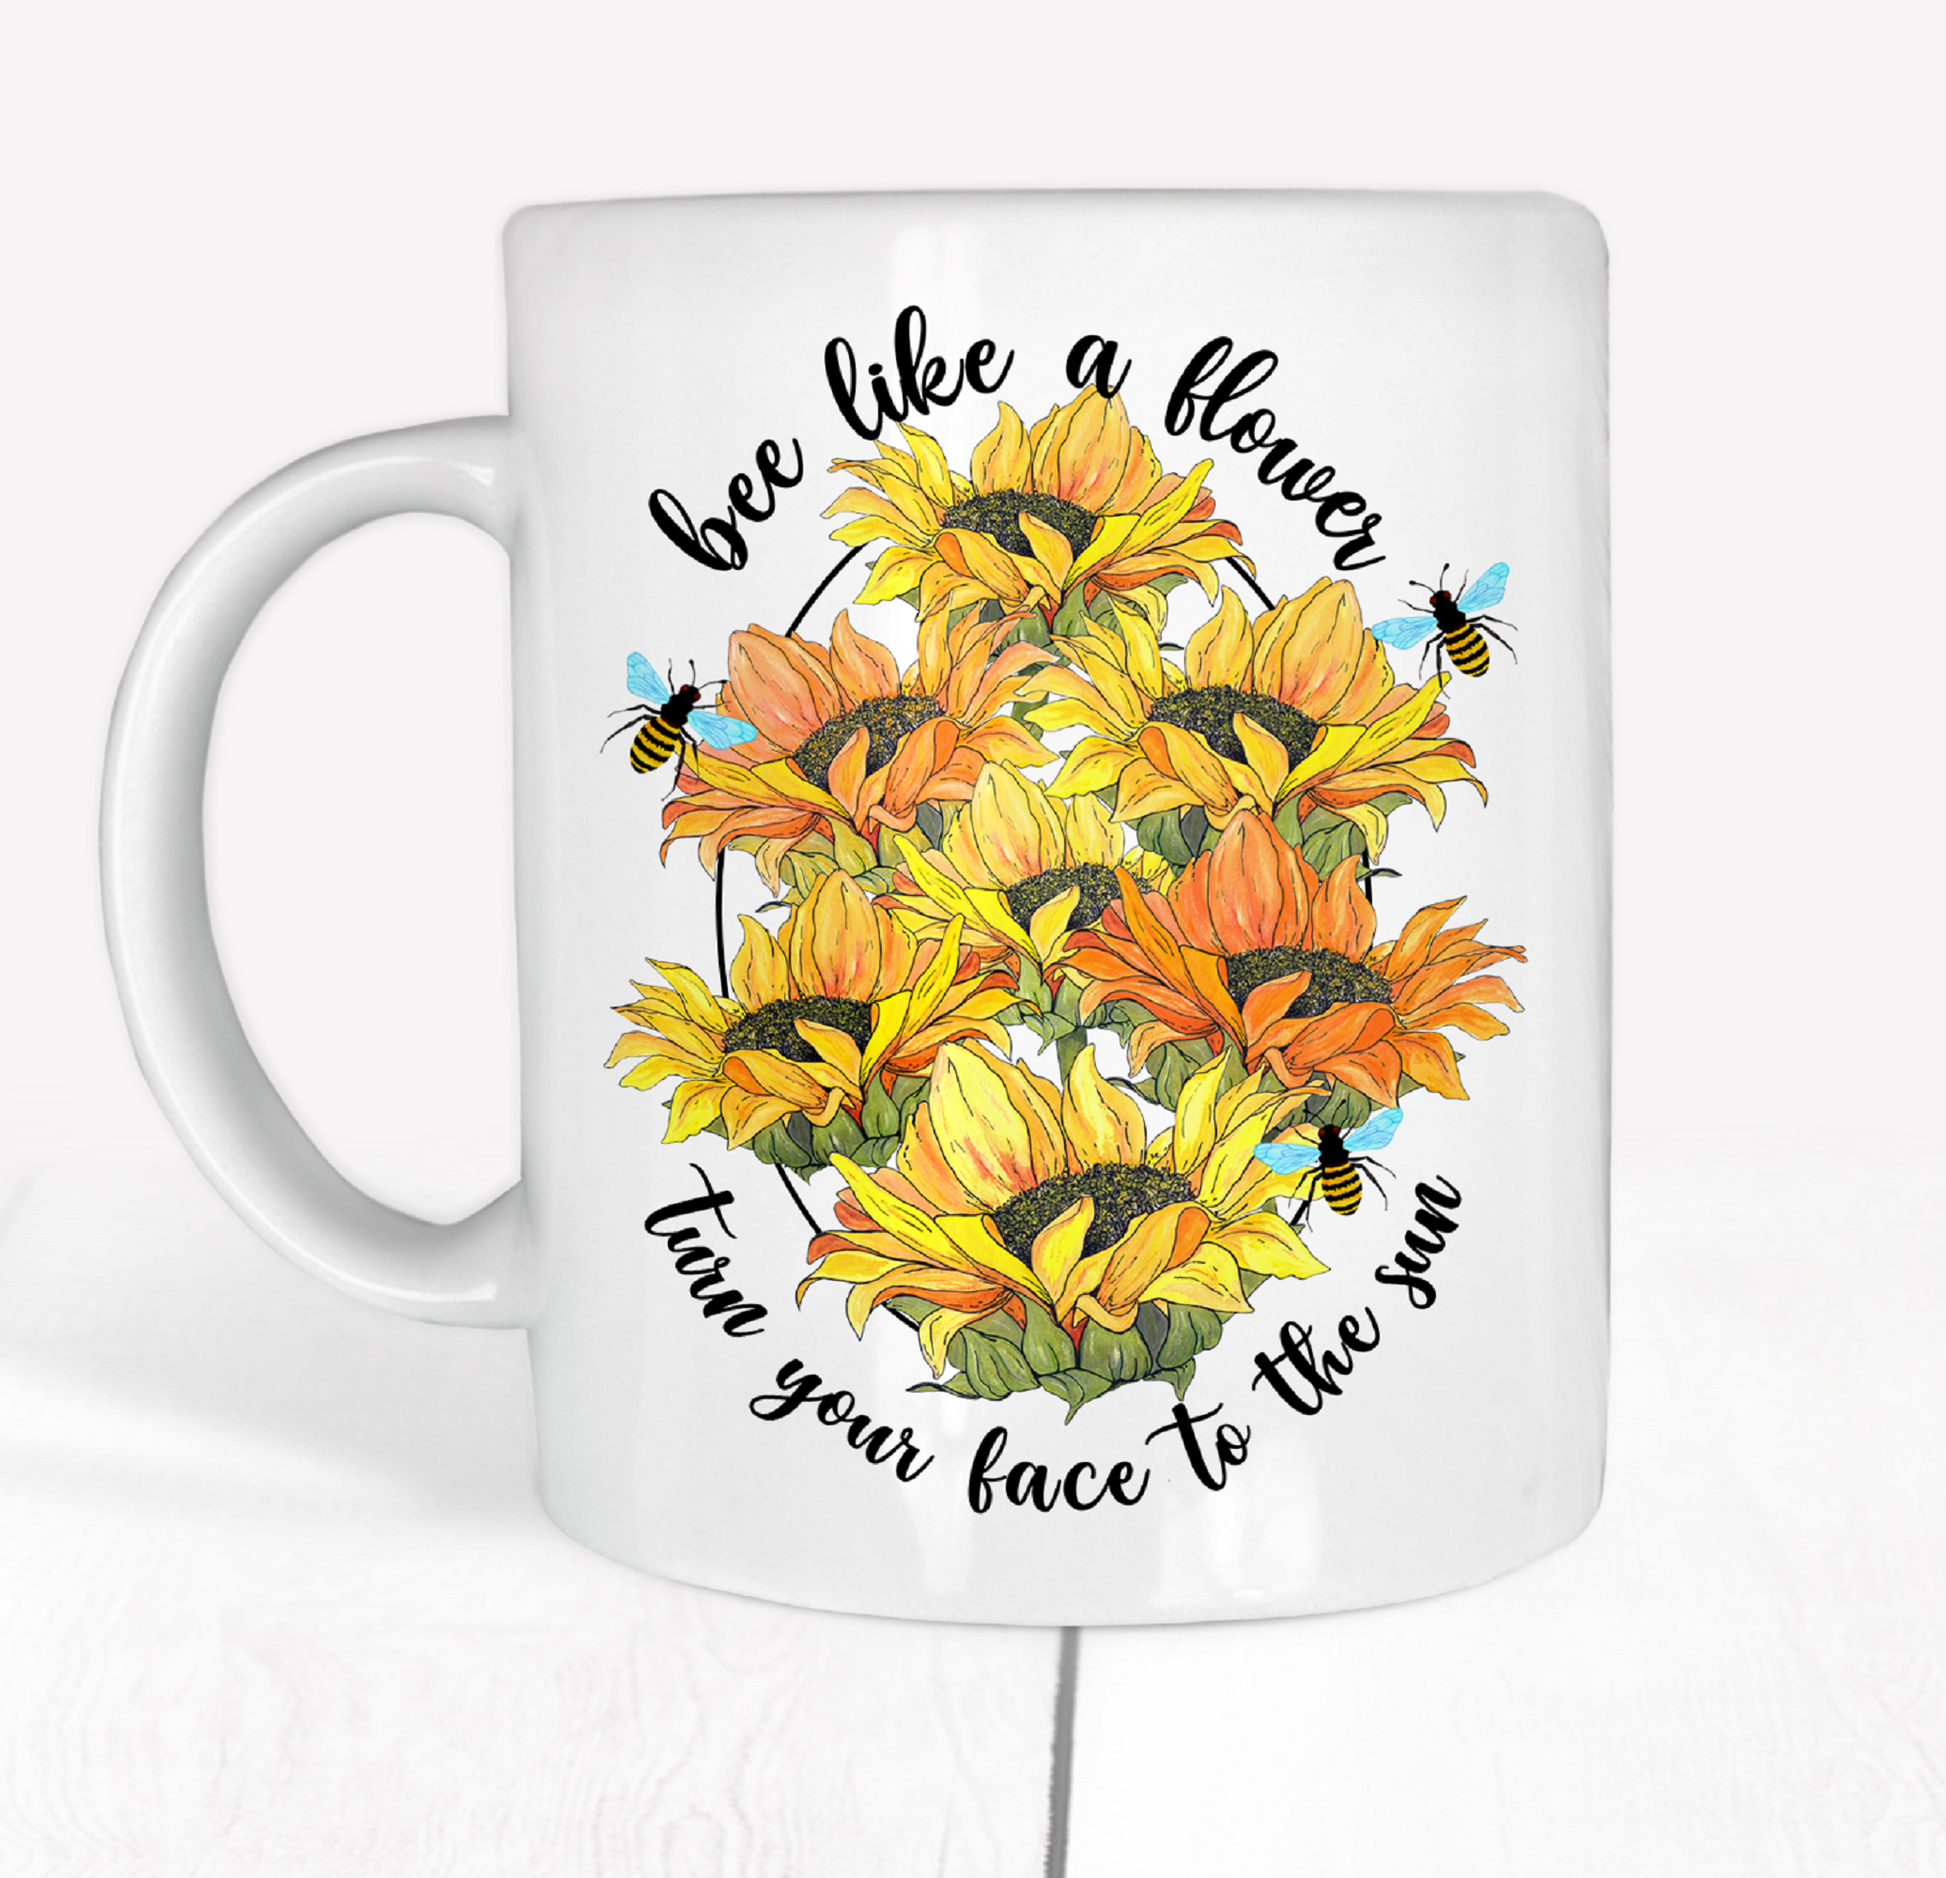  Bee Like a Flower Coffee Mug by Free Spirit Accessories sold by Free Spirit Accessories